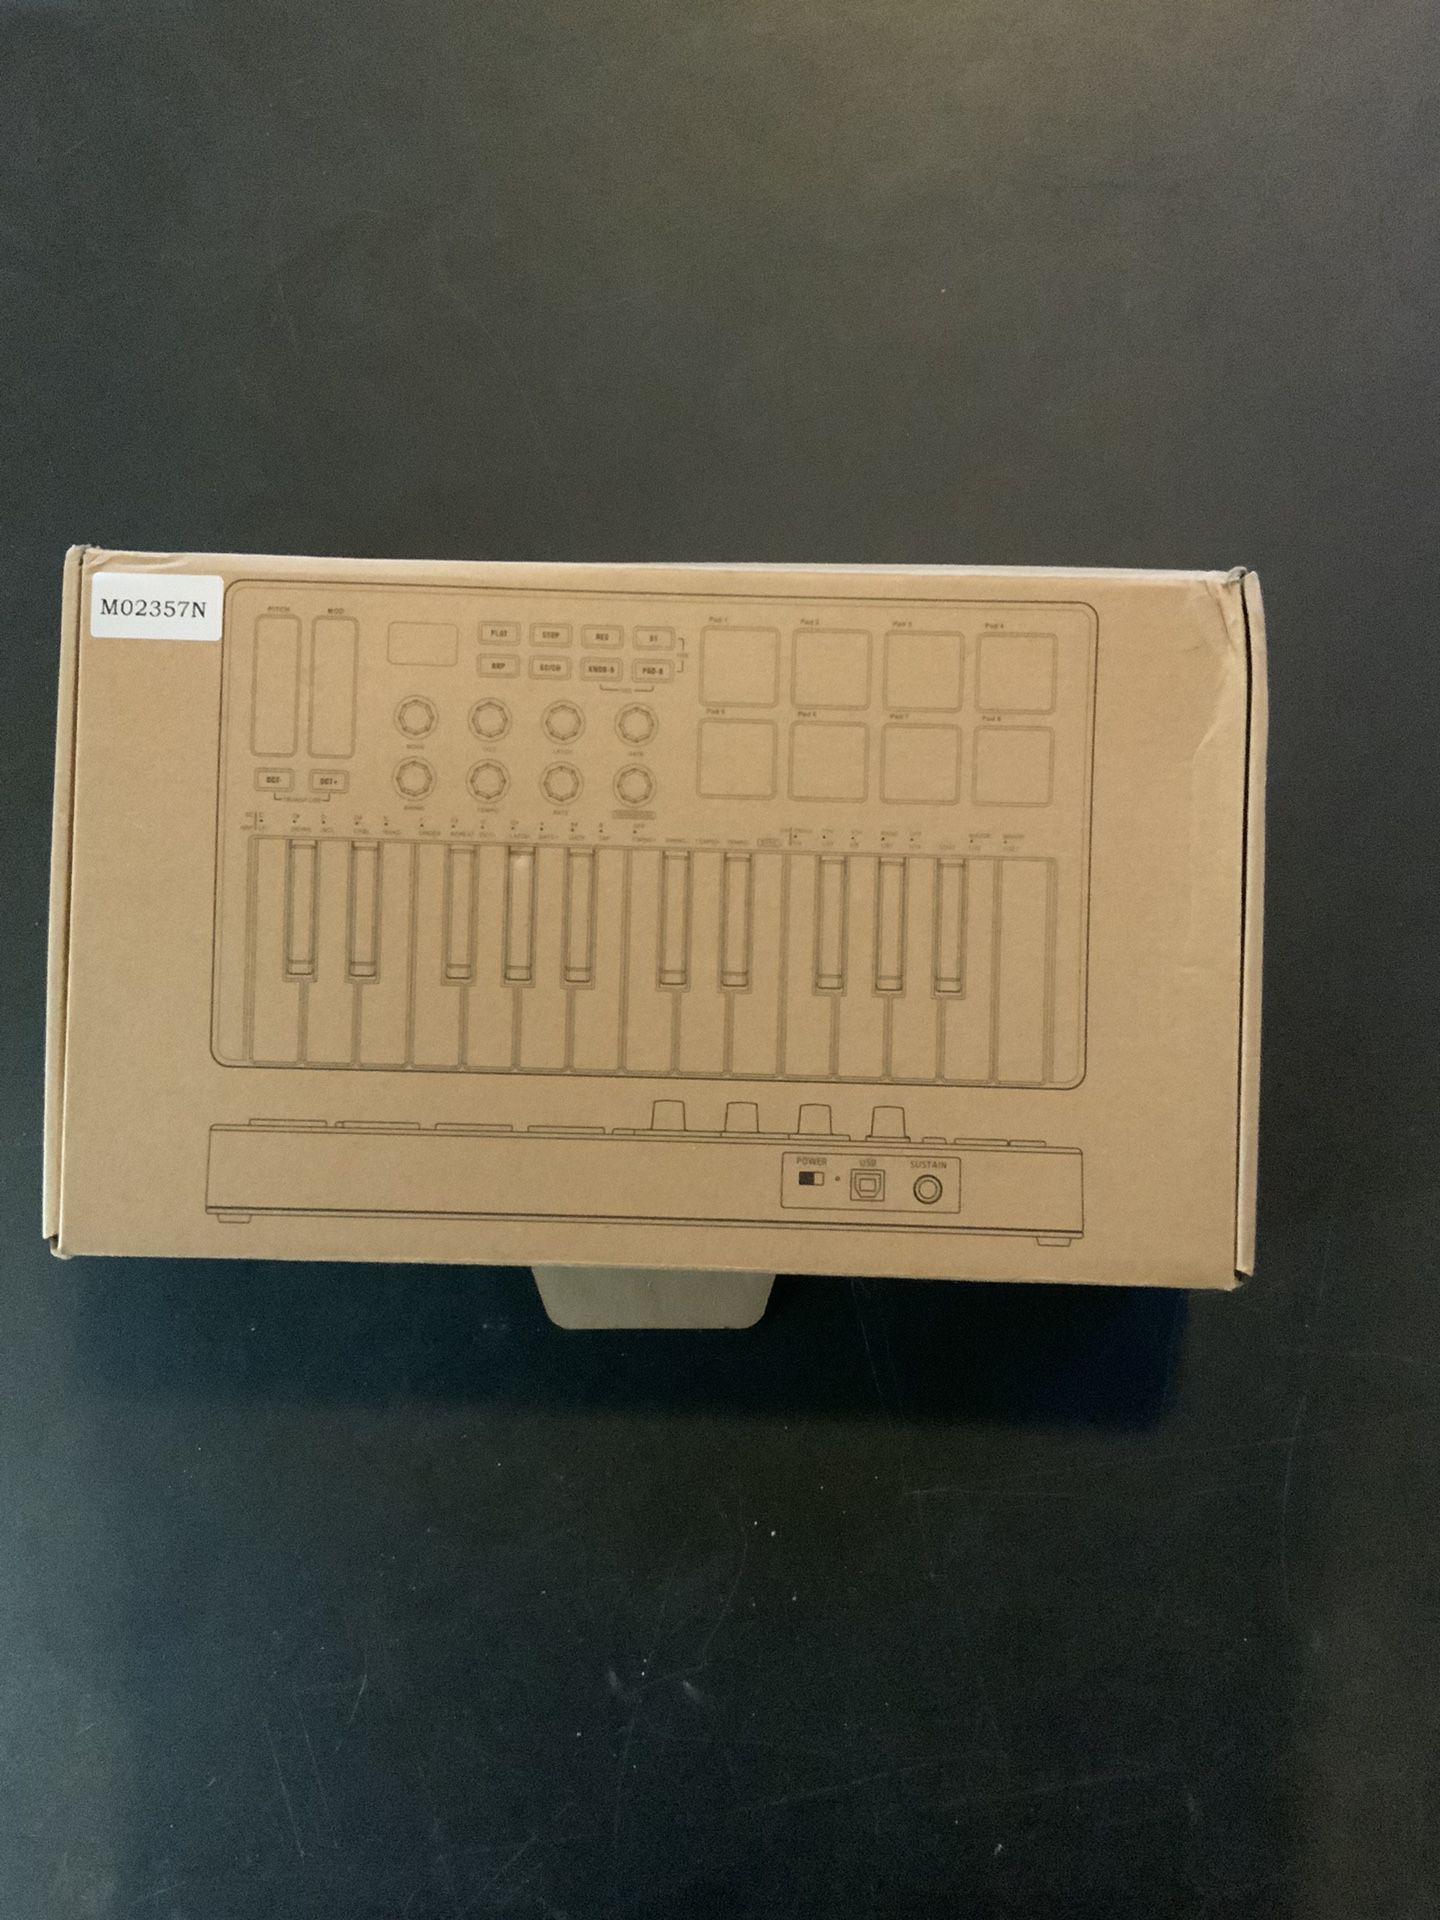 MIDI Control Keyboard (Brand New)